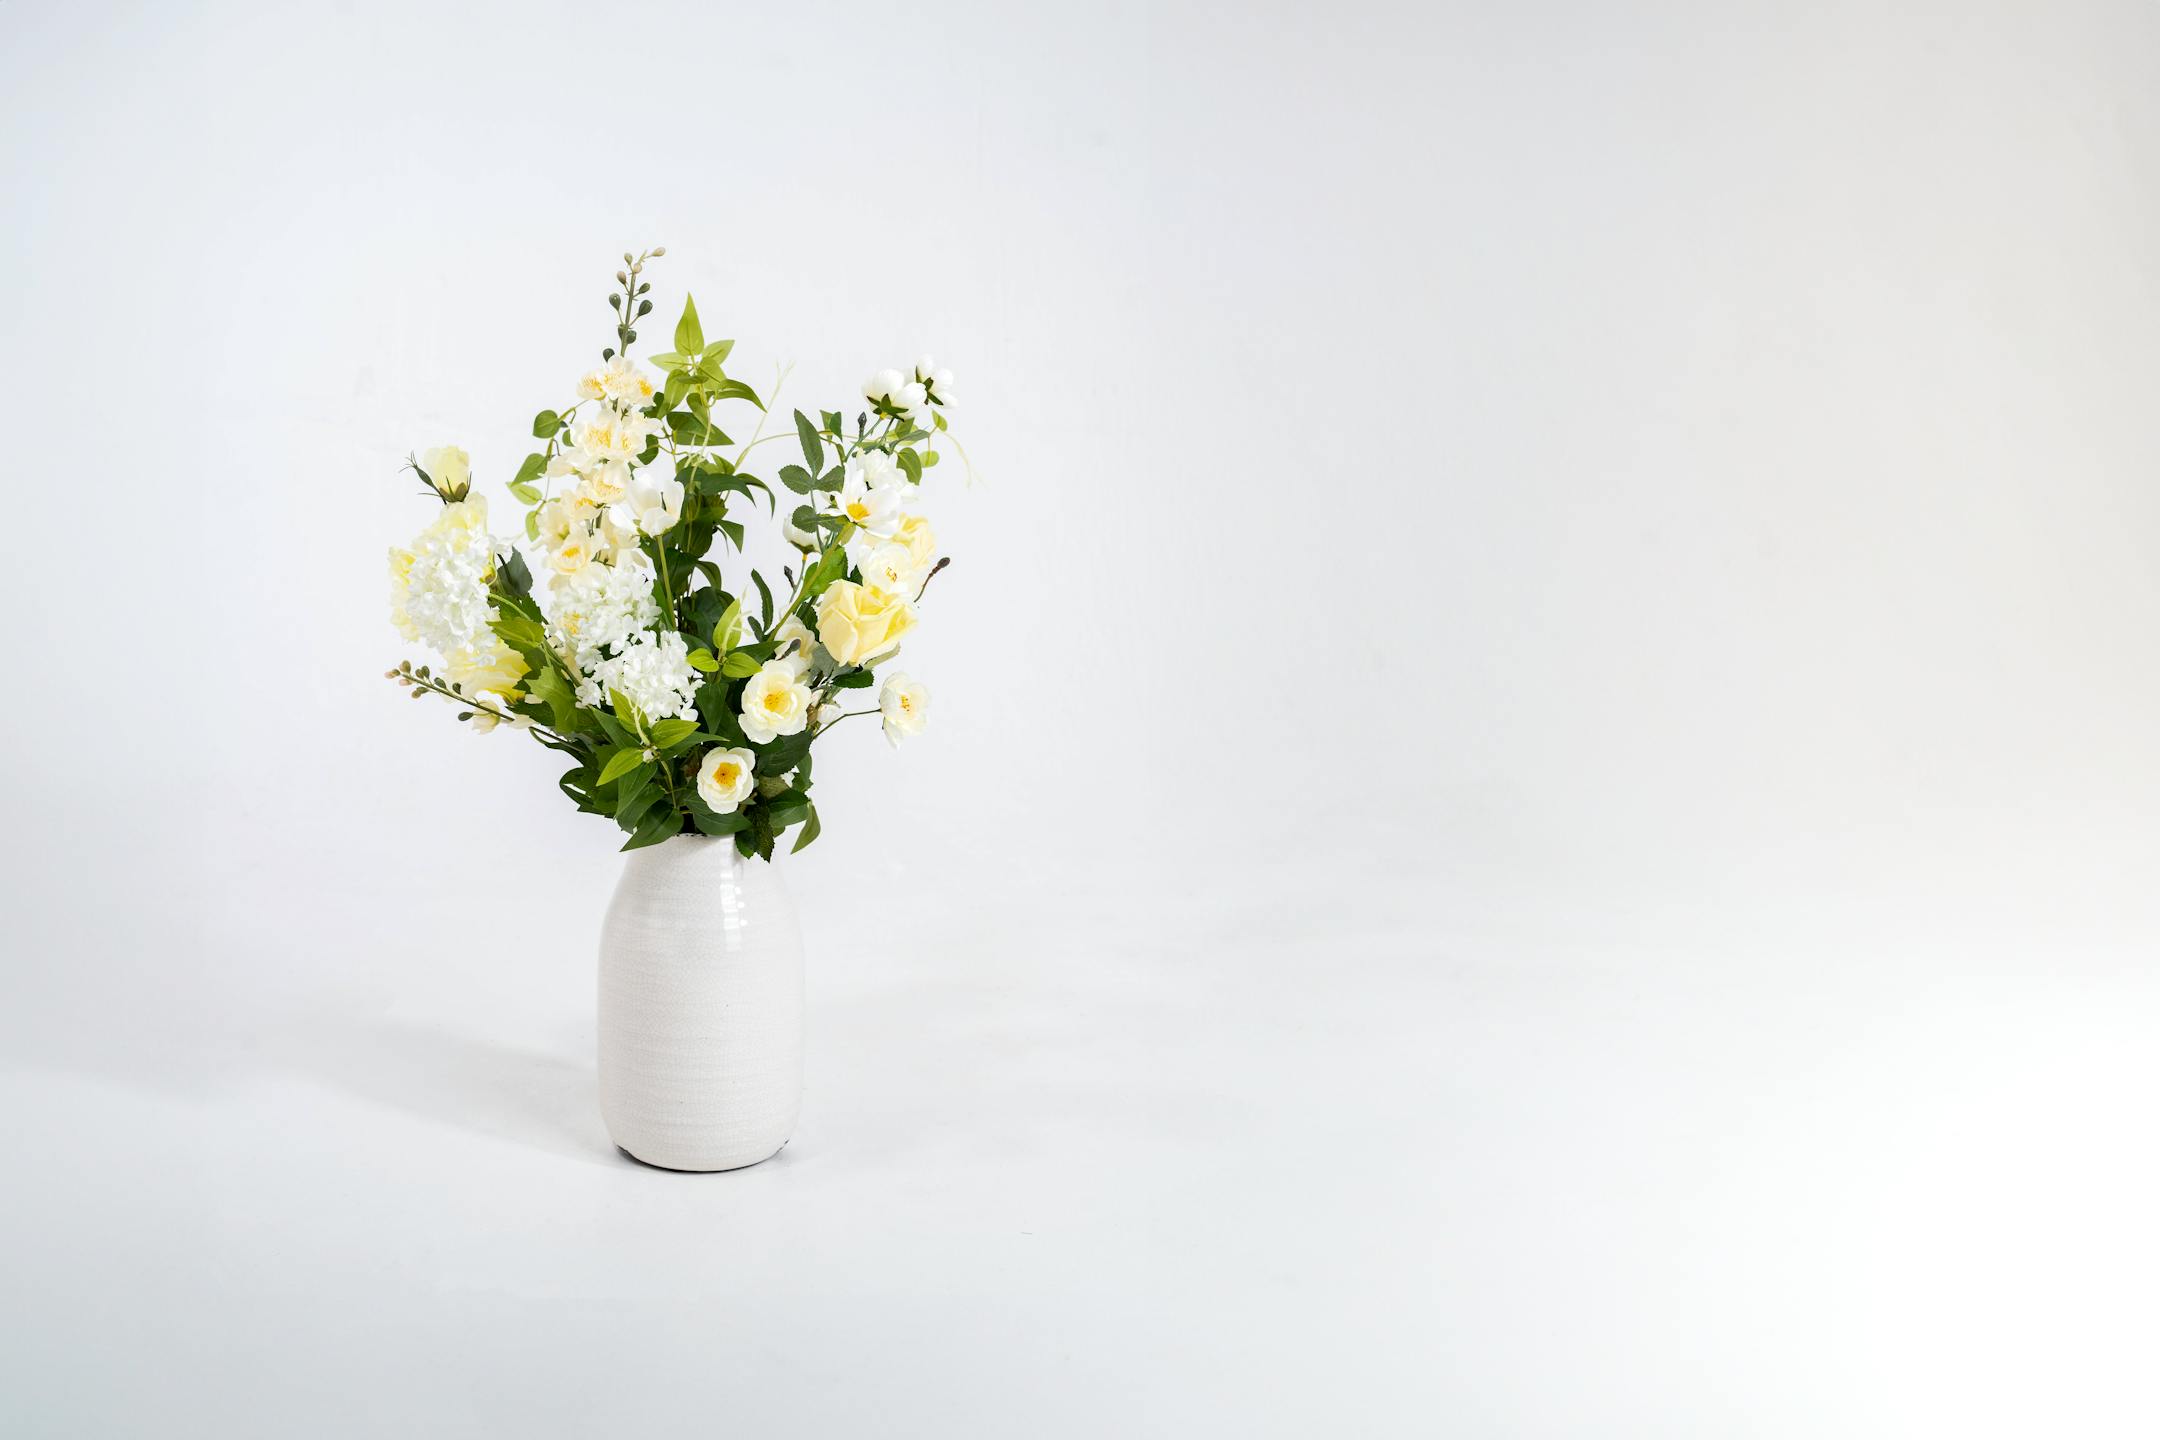 Faux joyful bunch in white ceramic vase